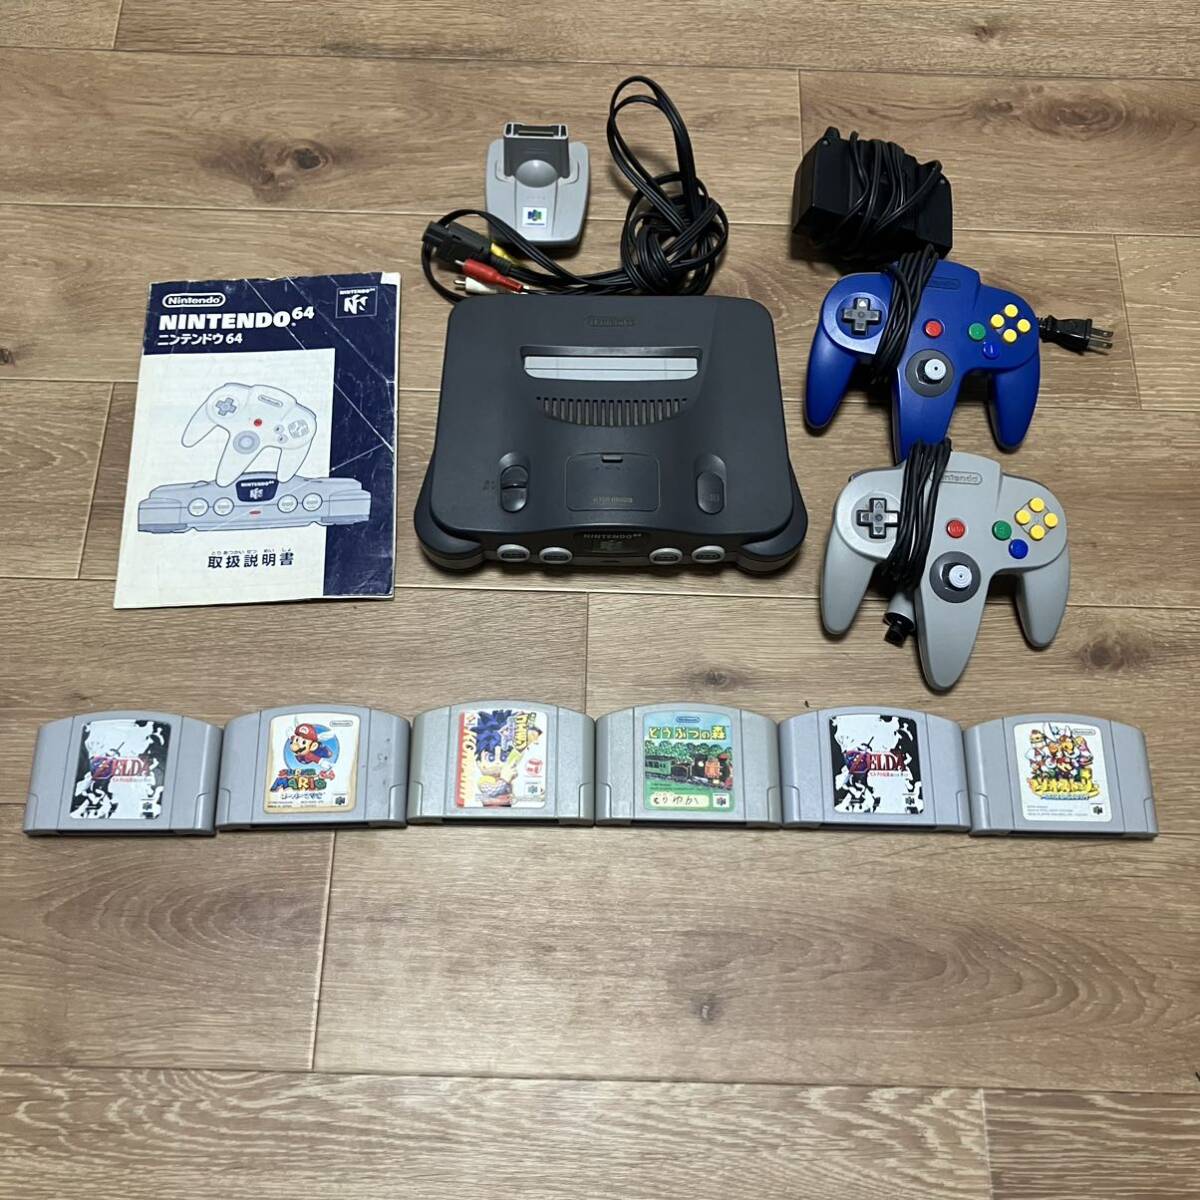 4-275 nintendo Nintendo person ton dou64 game machine soft controller adaptor Mario Zelda Animal Crossing game cassette summarize 